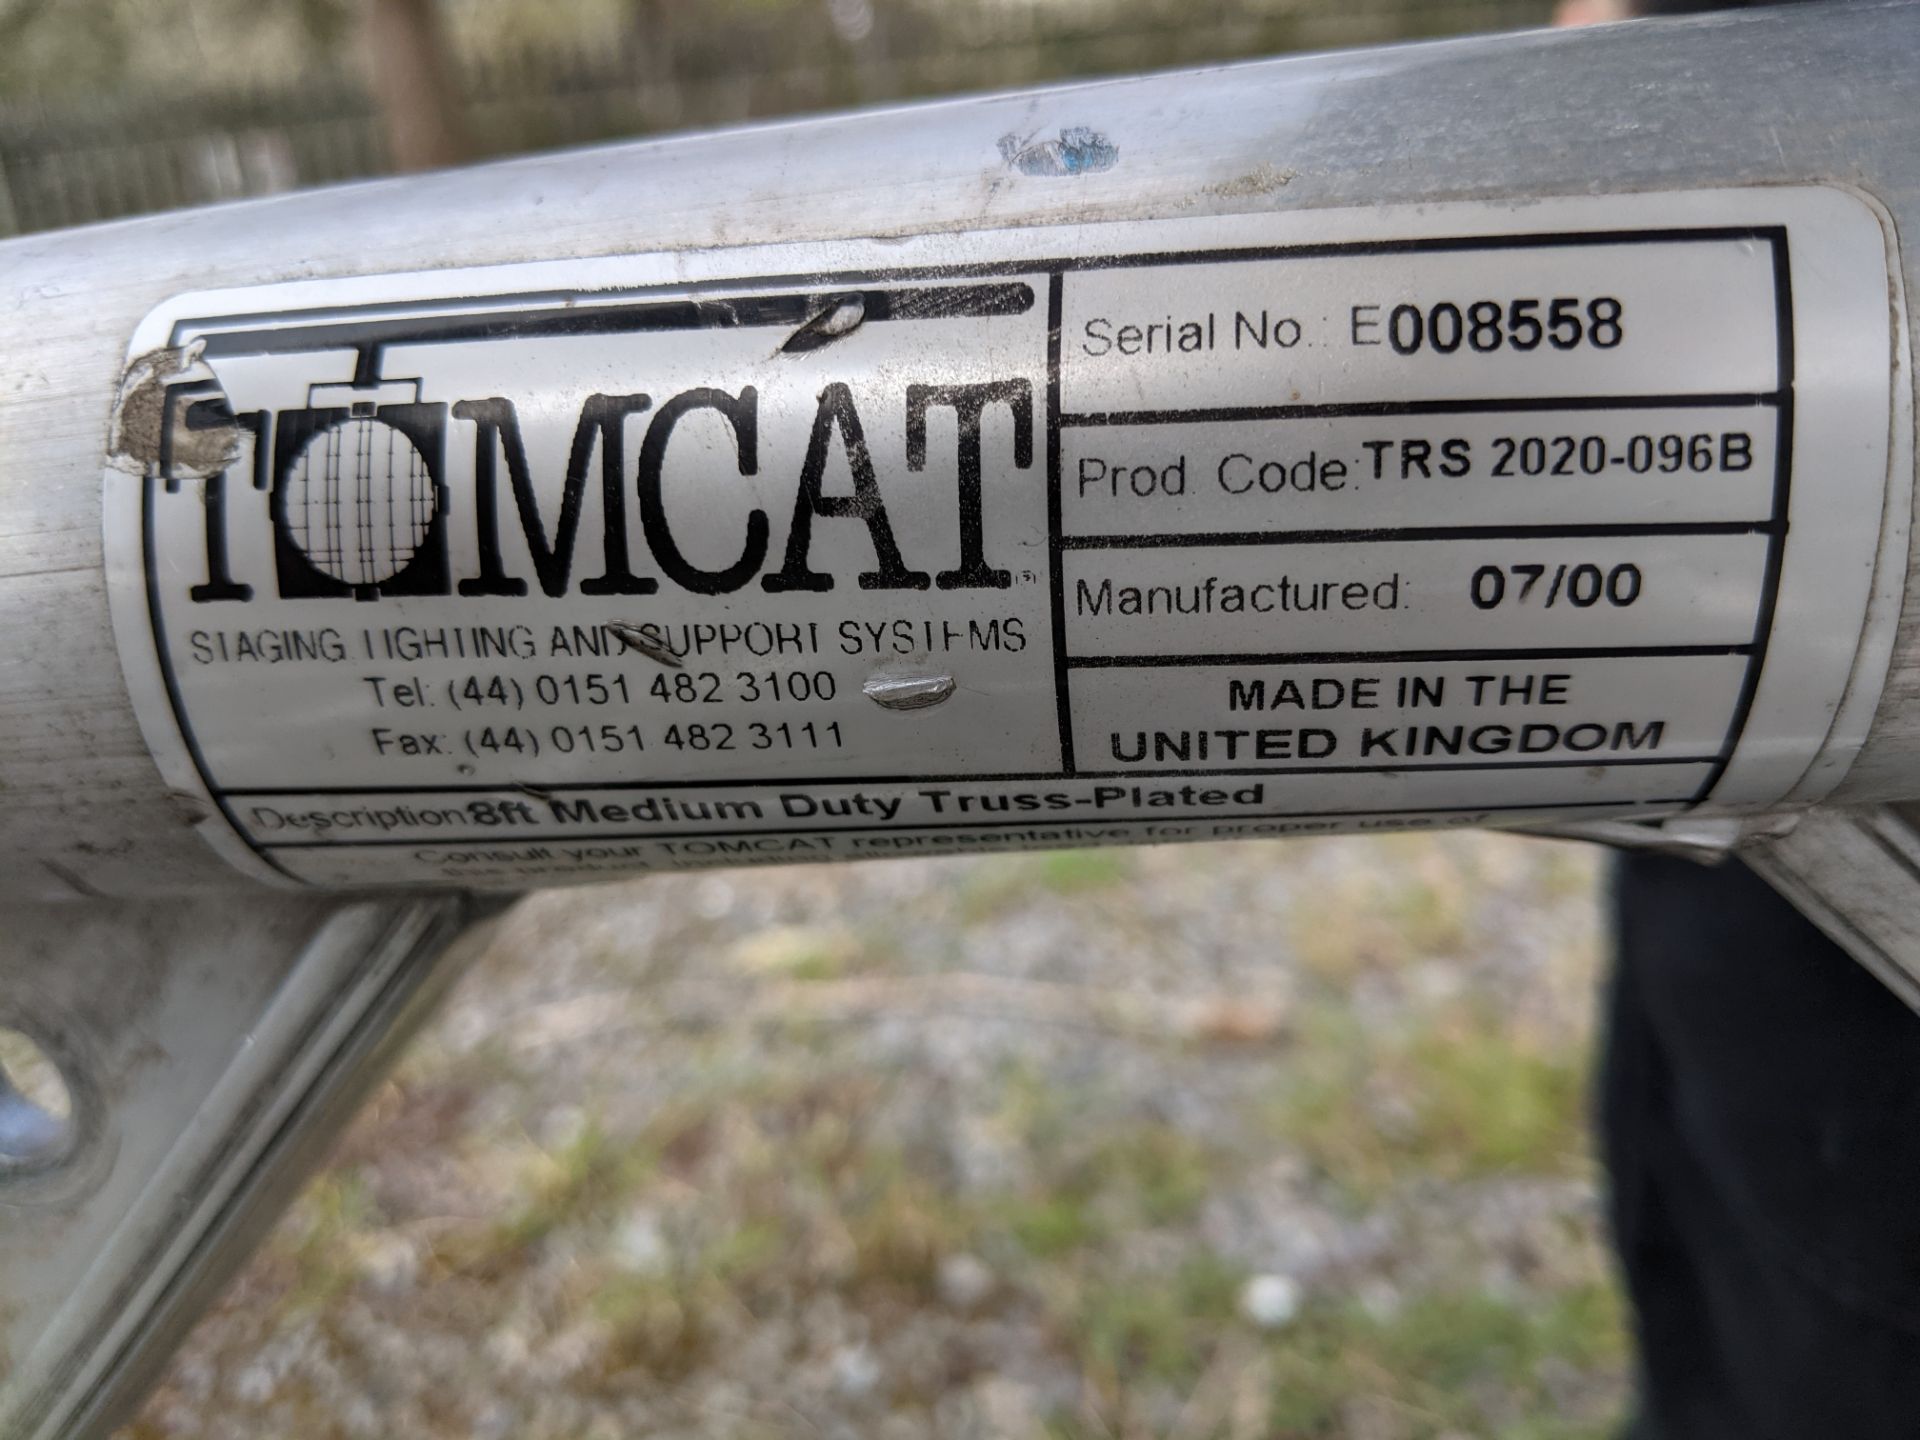 20.5" Tomcat 8ft Medium Duty Truss - plated. 123257. Ex-Hire, Fair Condition. TRS 2020-096B. - Bild 4 aus 4